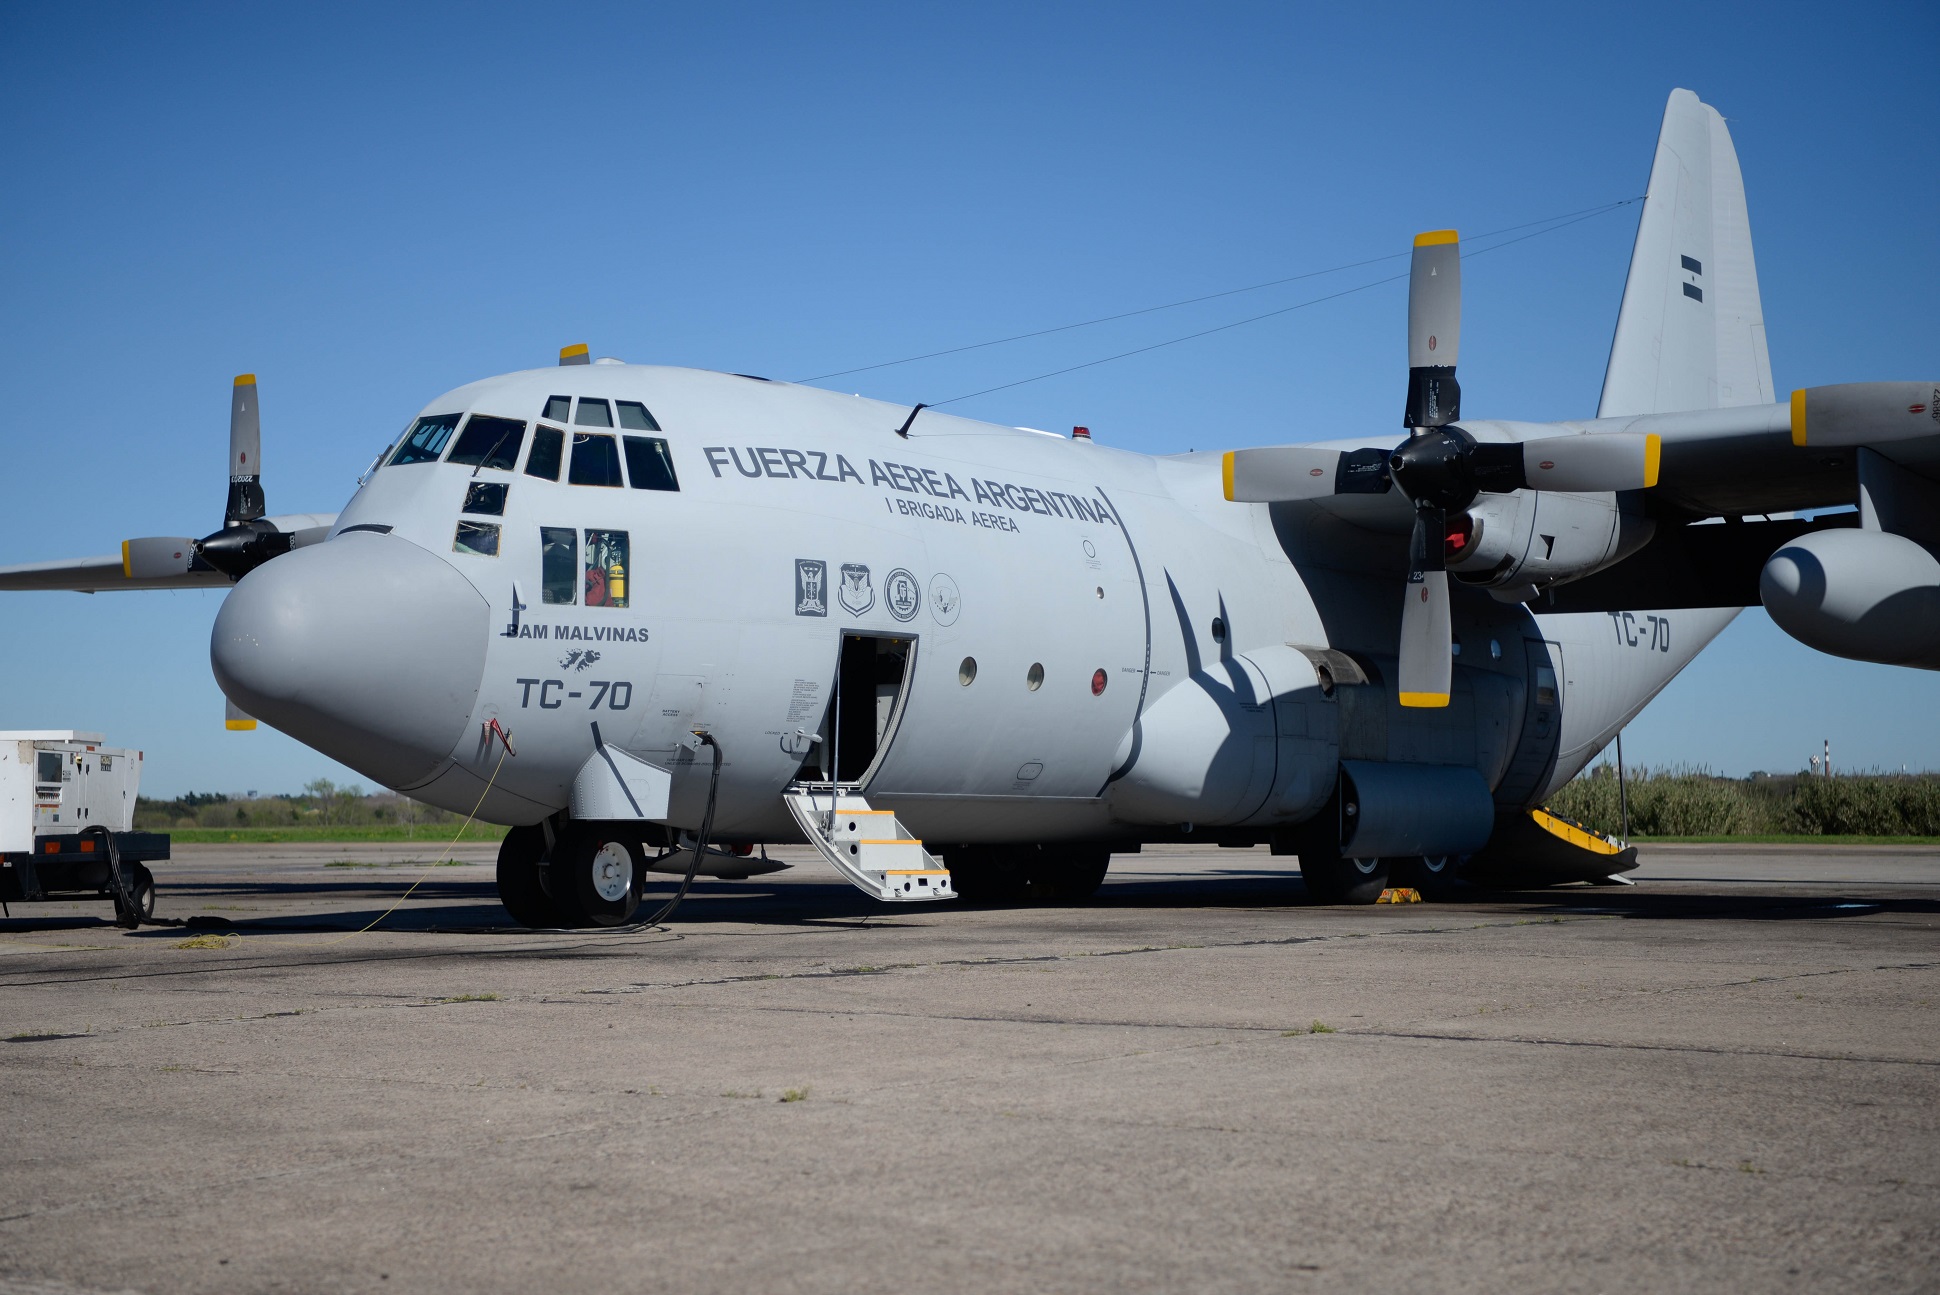 Se presentó el primer avión Hércules C-130 modernizado íntegramente en FAdeA